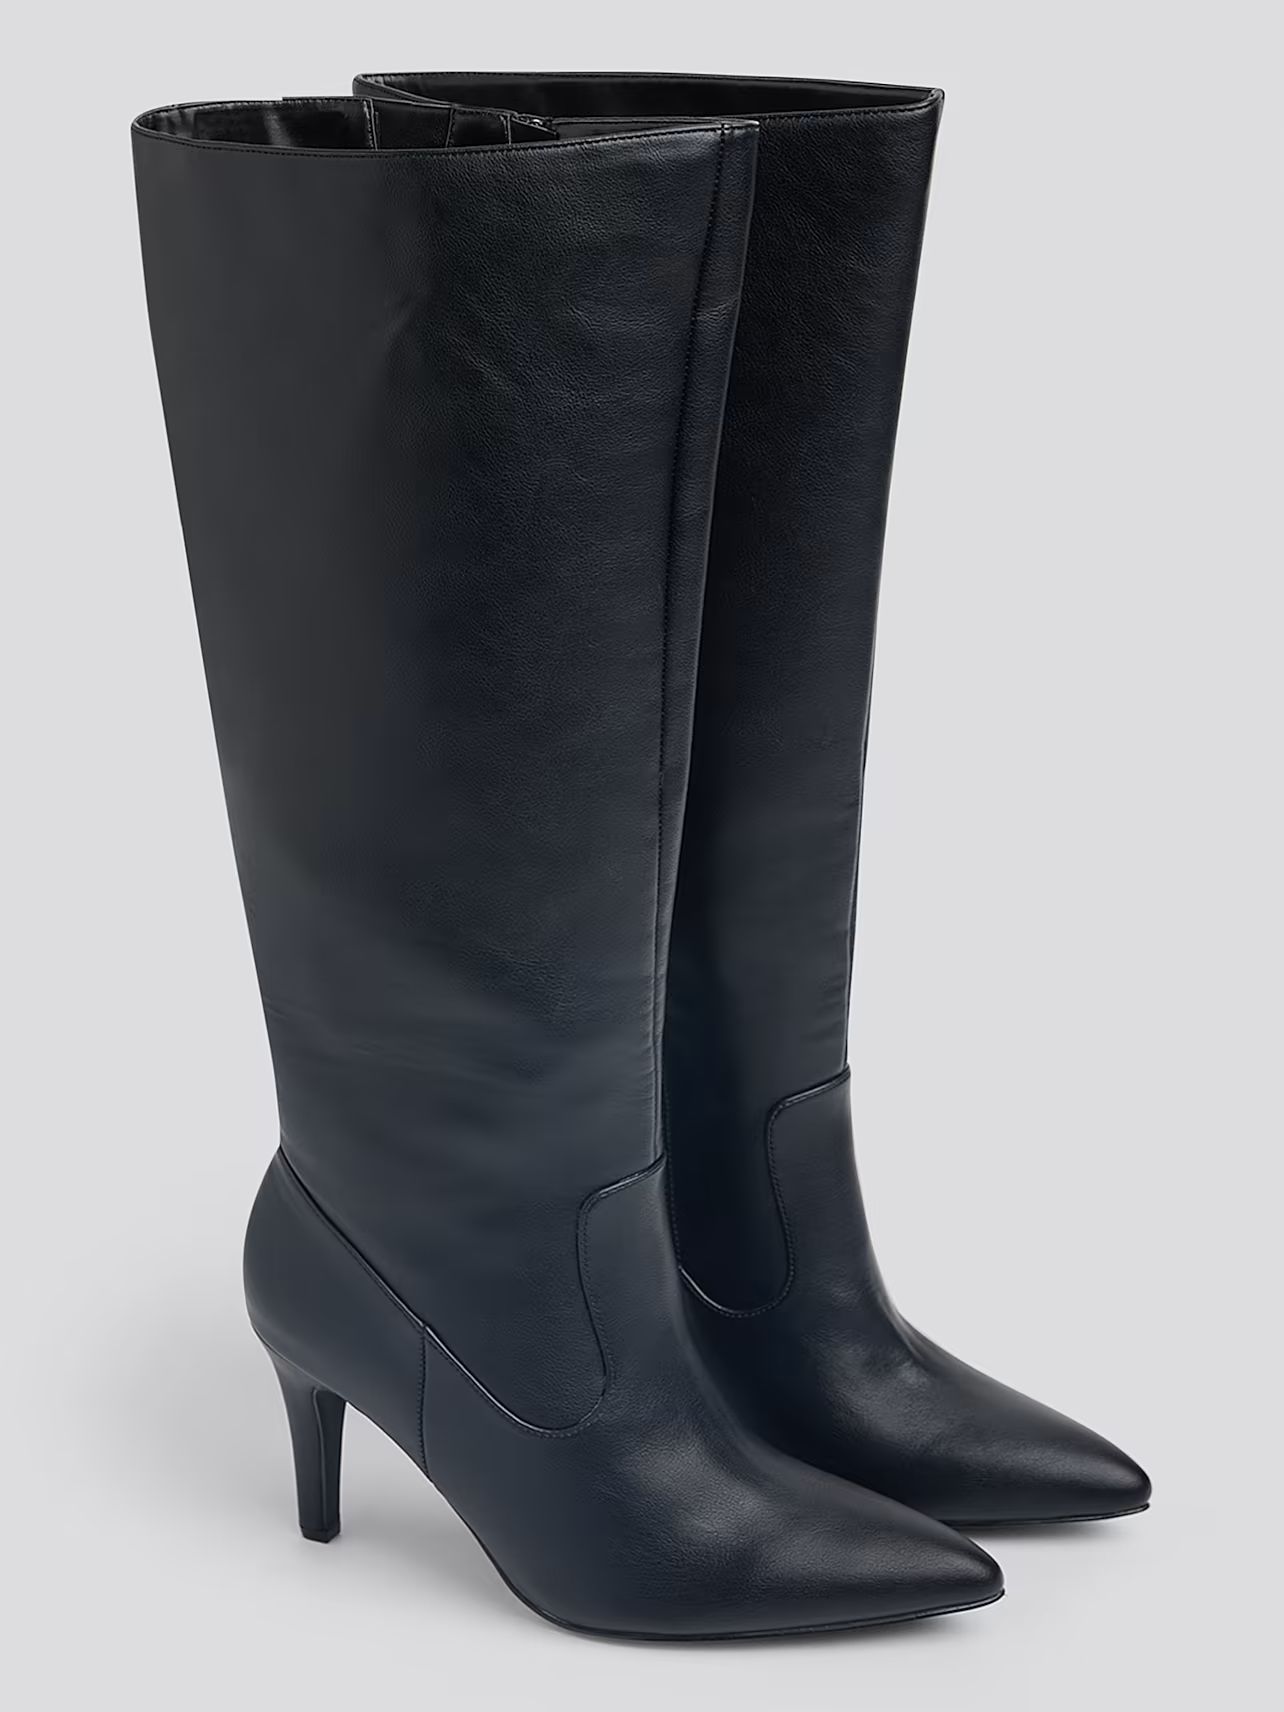 Lisi Wide Calf Knee High Boots - Fashion To Figure | Fashion To Figure